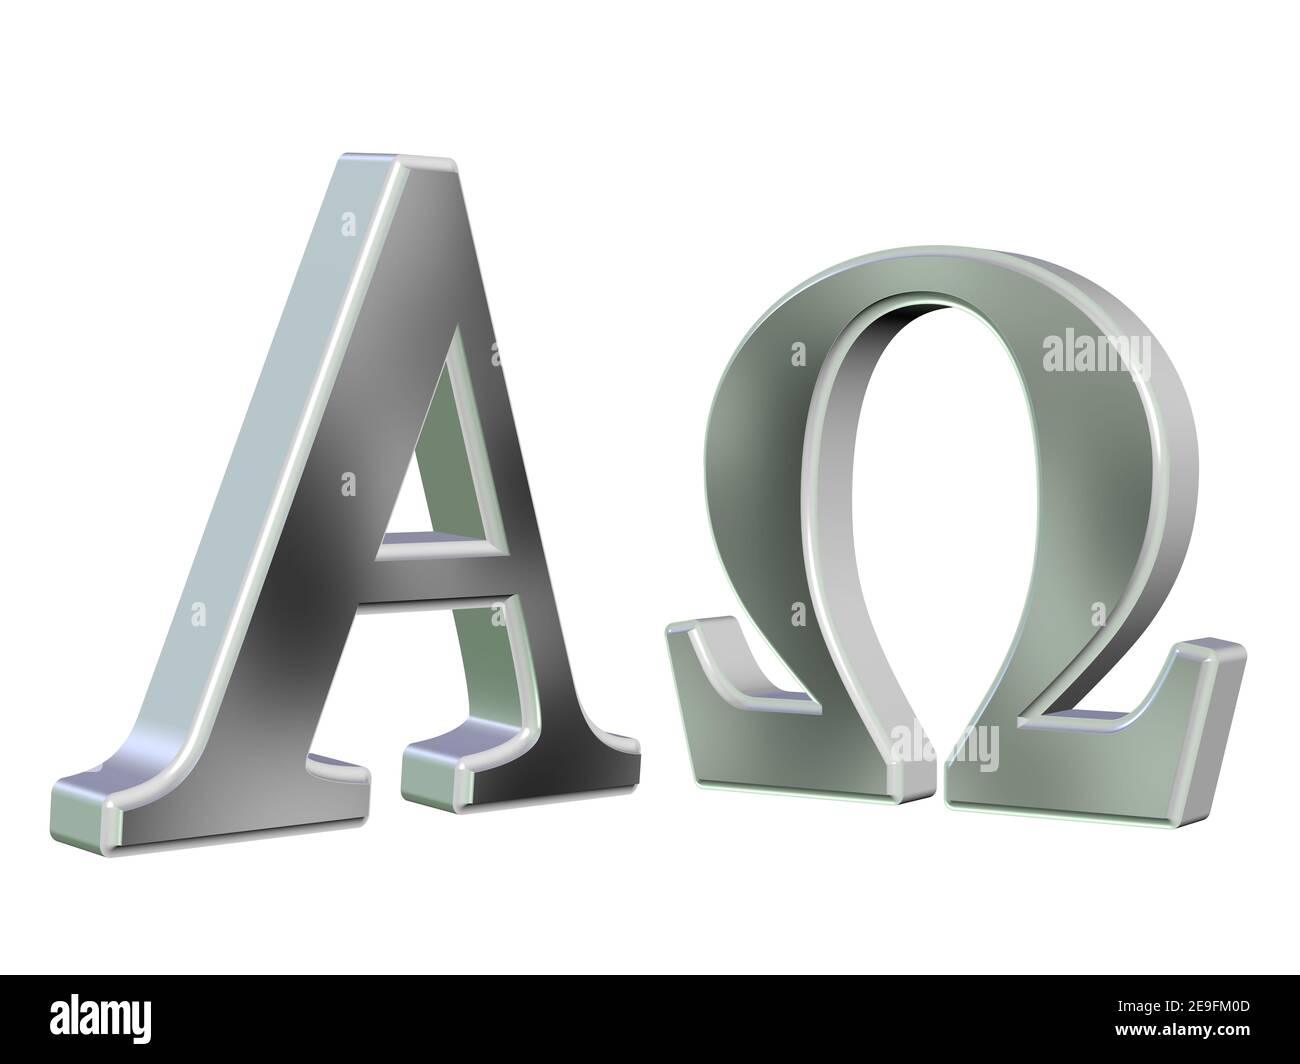 Alpha and omega symbol -Fotos und -Bildmaterial in hoher Auflösung - Seite  2 - Alamy